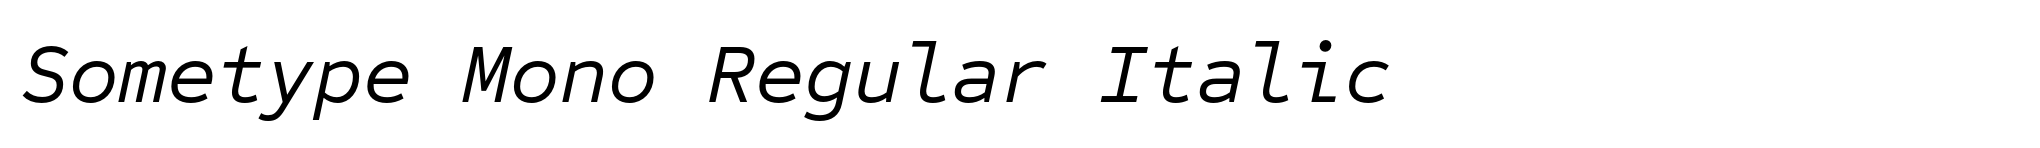 Sometype Mono Regular Italic image